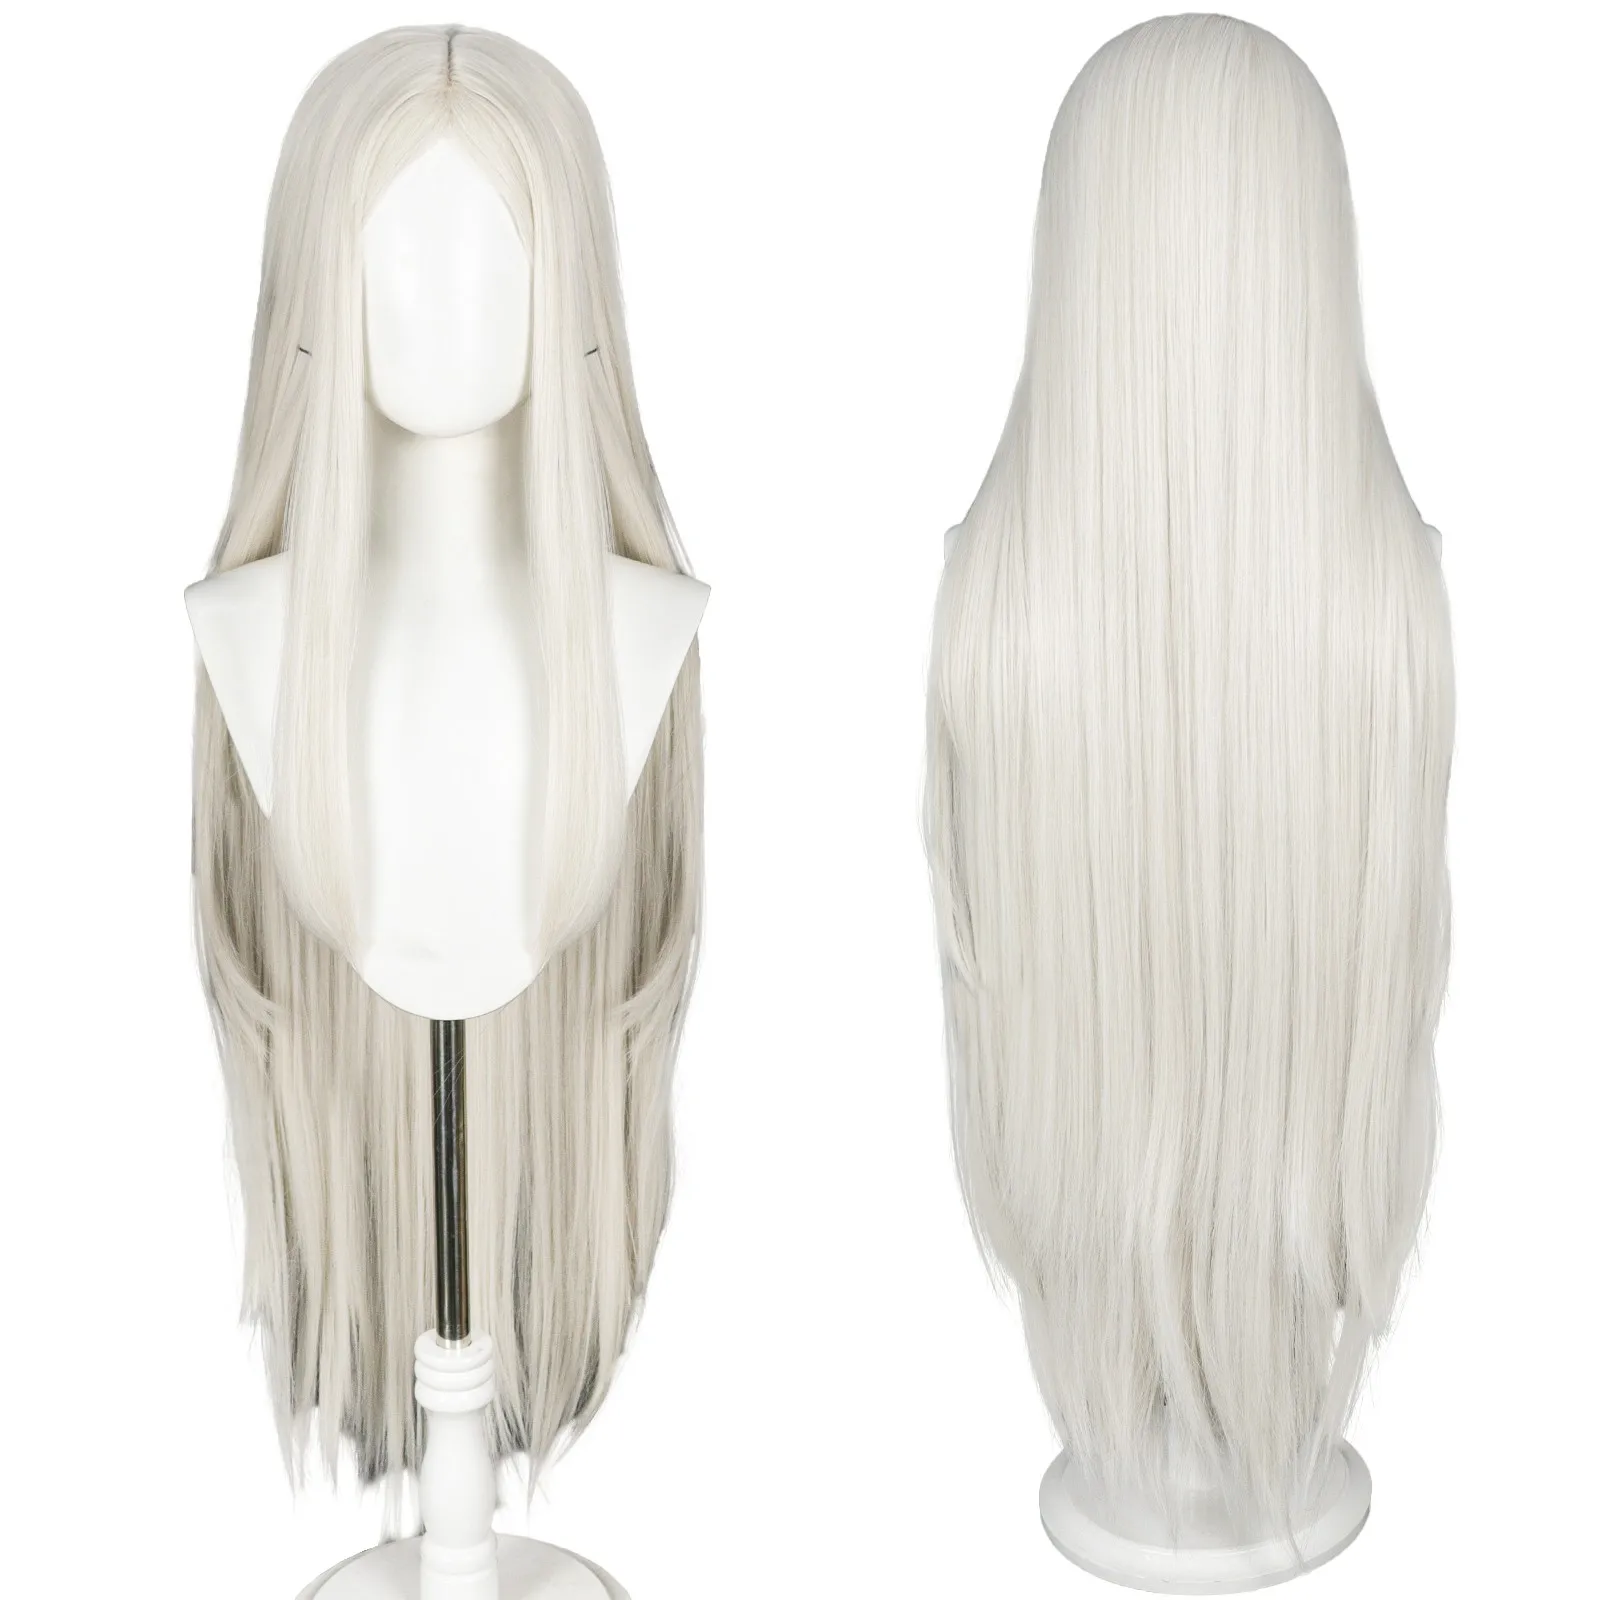 Anogol Synthetic Juraku Sachiko Cosplay Wig Anime Kakegurui Twin 100cm Long White Straight Hair Machine Made for Halloween Party